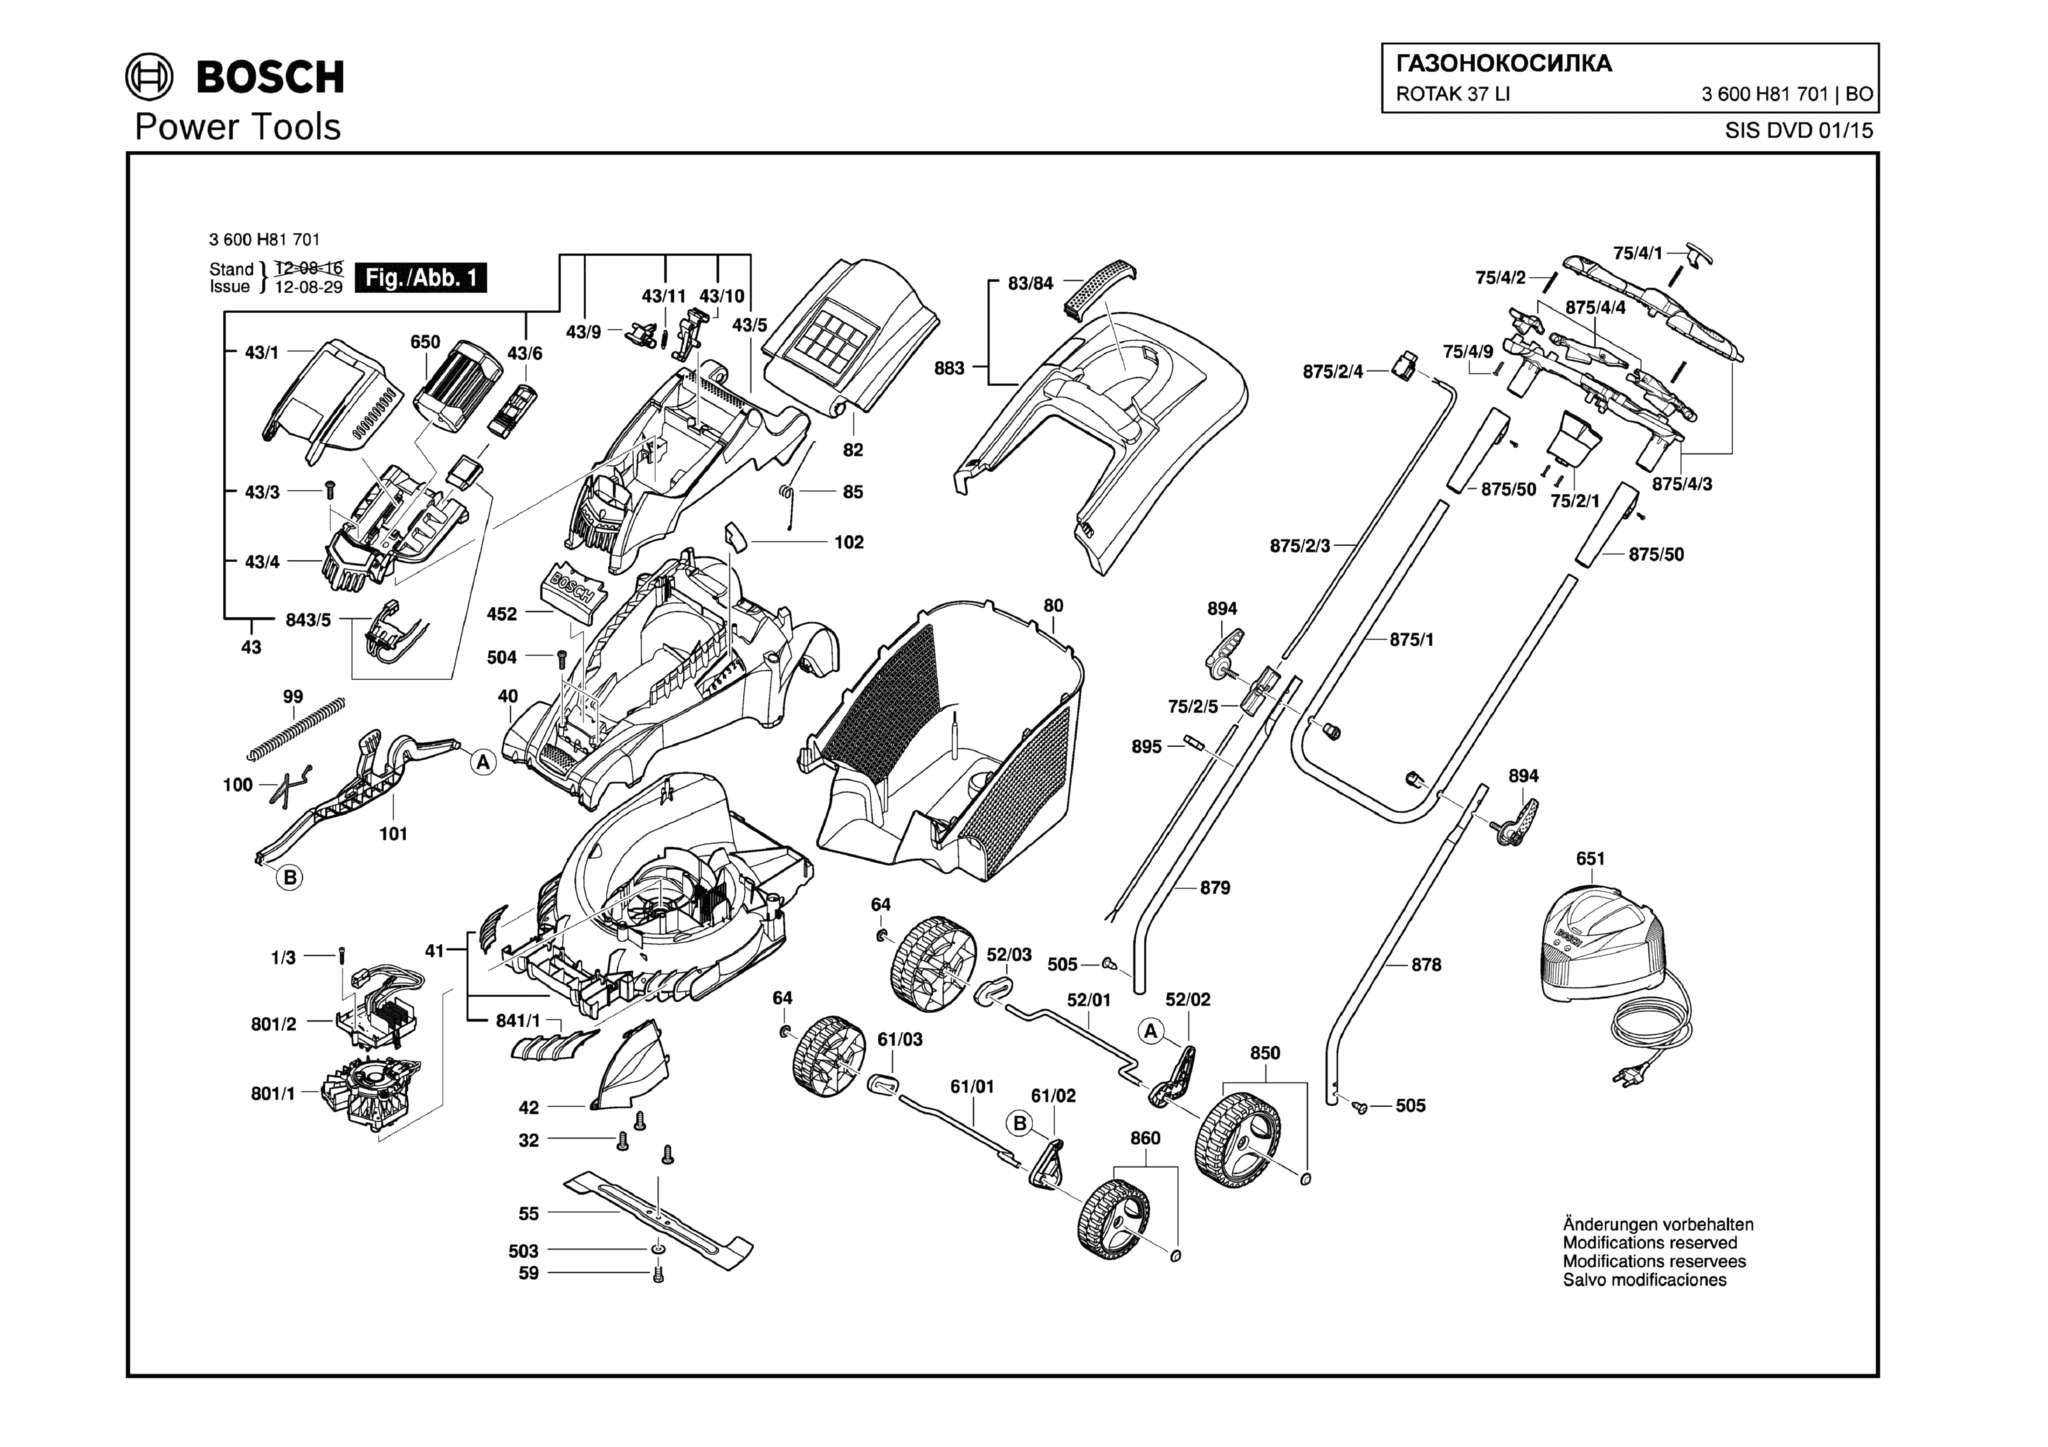 Запчасти, схема и деталировка Bosch ROTAK 37 LI (ТИП 3600H81701)